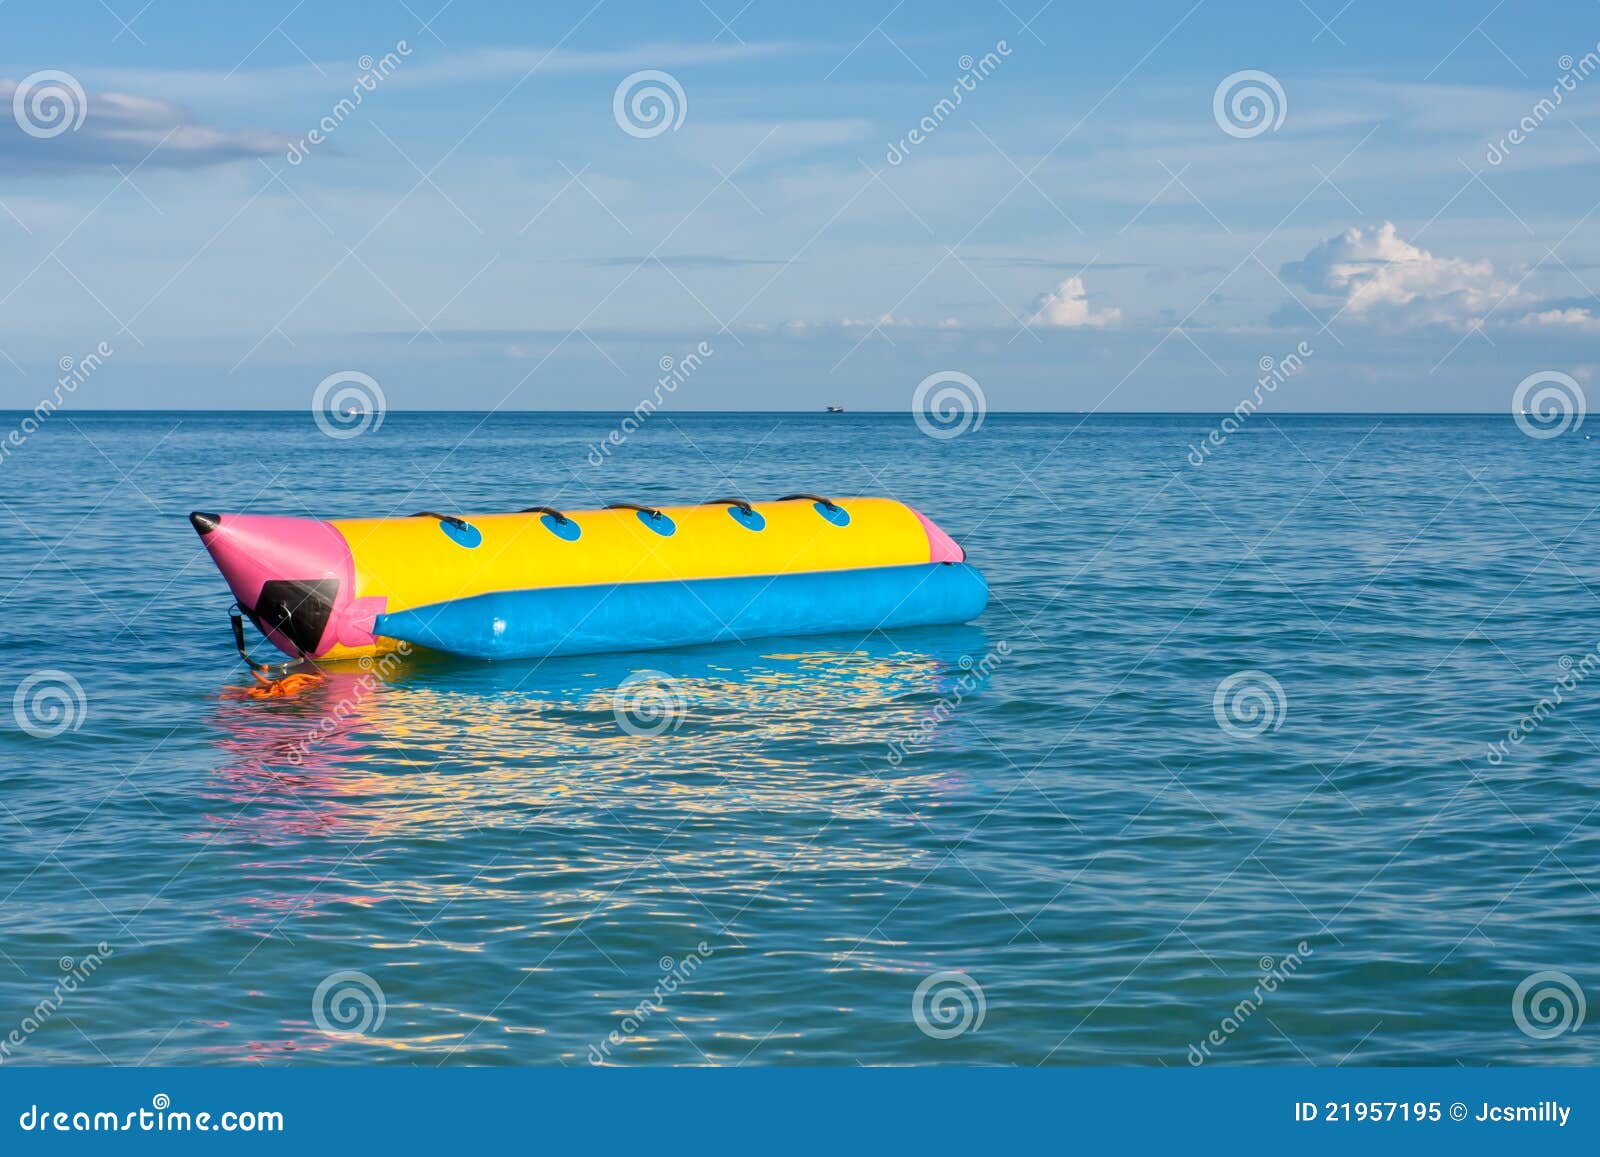 Banana Boat In The Sea Royalty Free Stock Photo - Image: 21957195